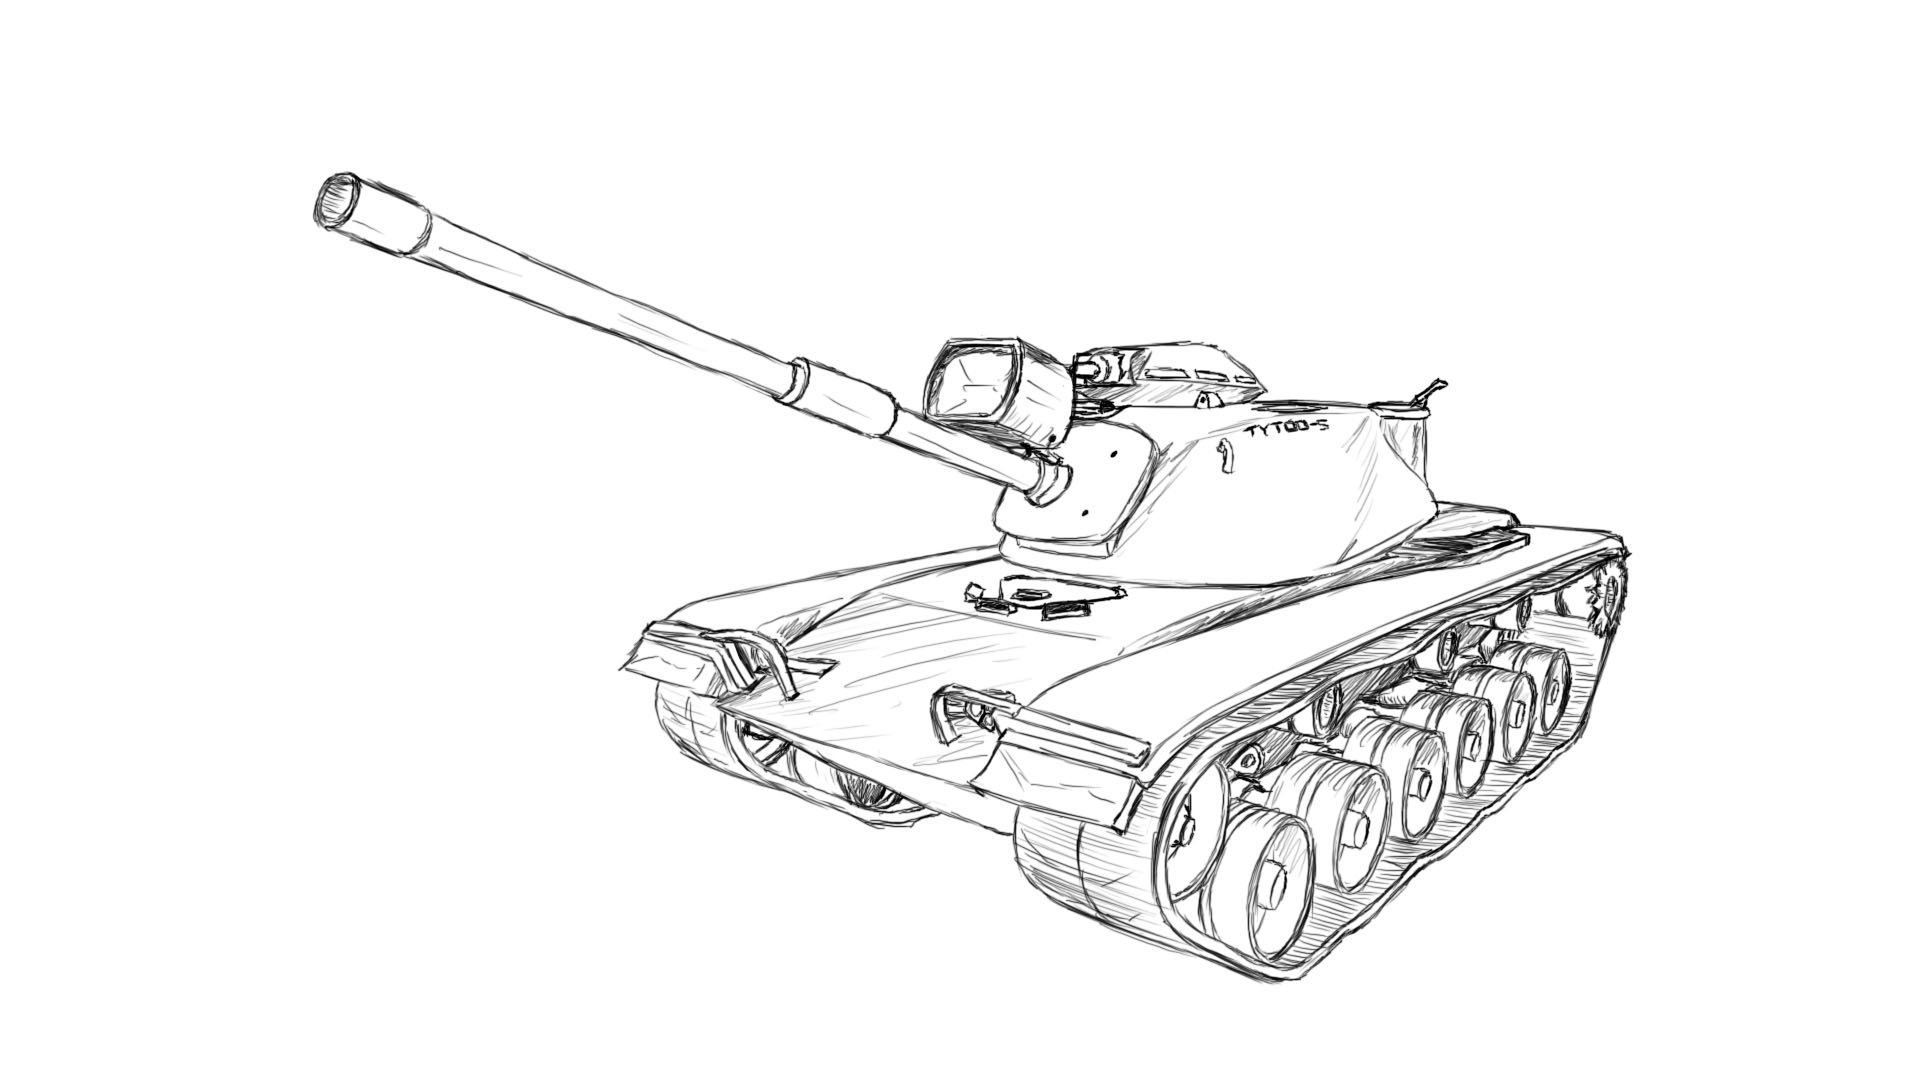 Легкая картинка танка. Рисунок танка карандашом. Рисунки танков карандашом. Рисунки танков для срисовки. Танки рисунки карандашом.